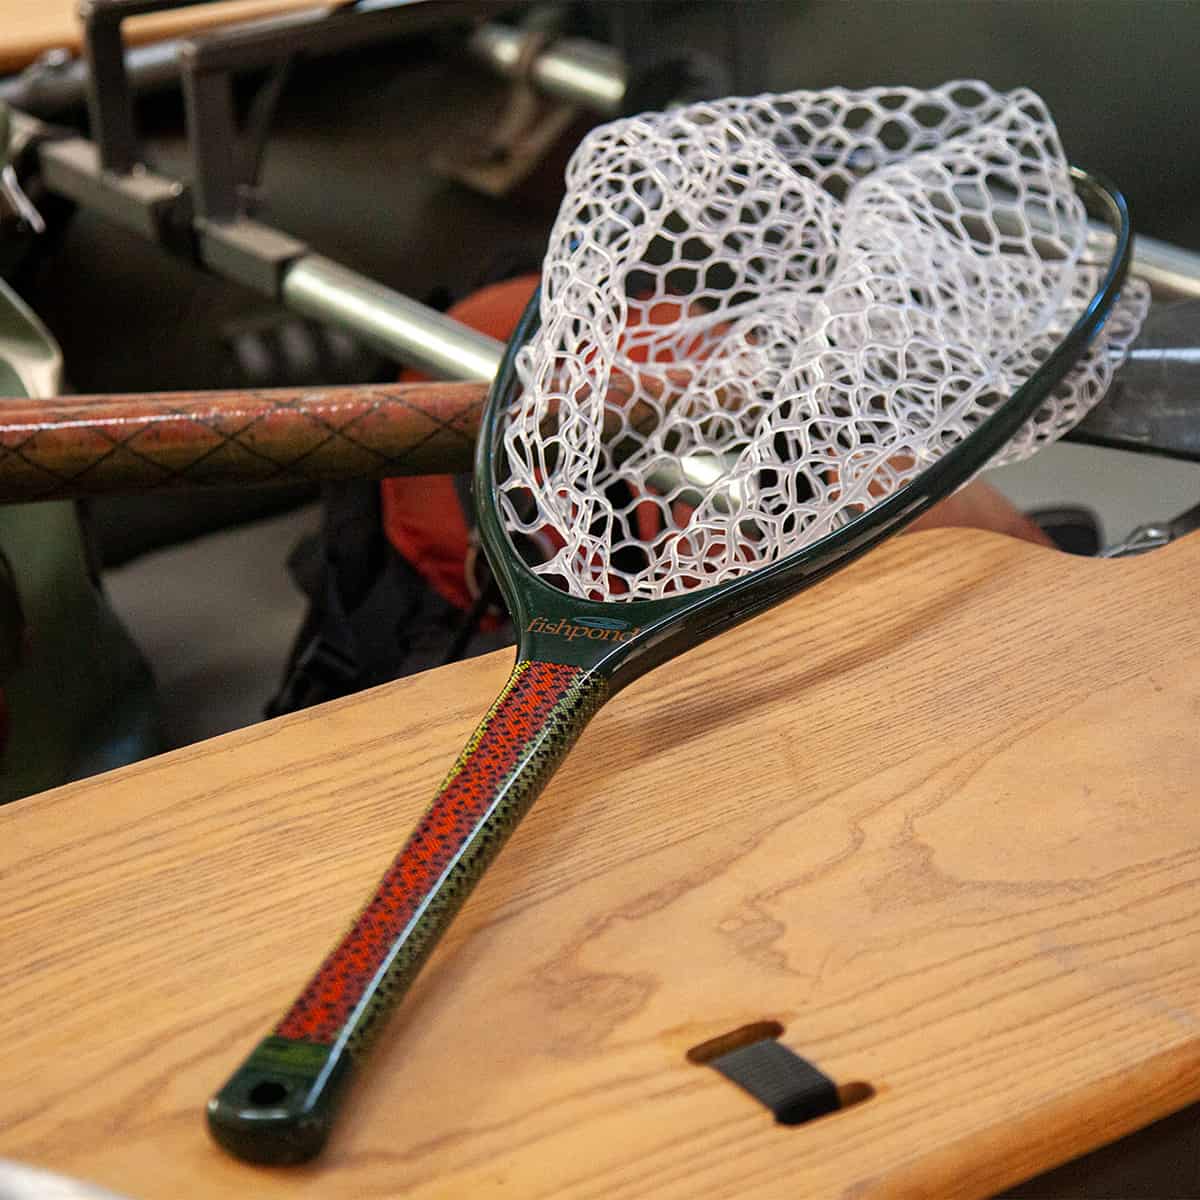 fishpond redband limited edition nomad emerger net on wood